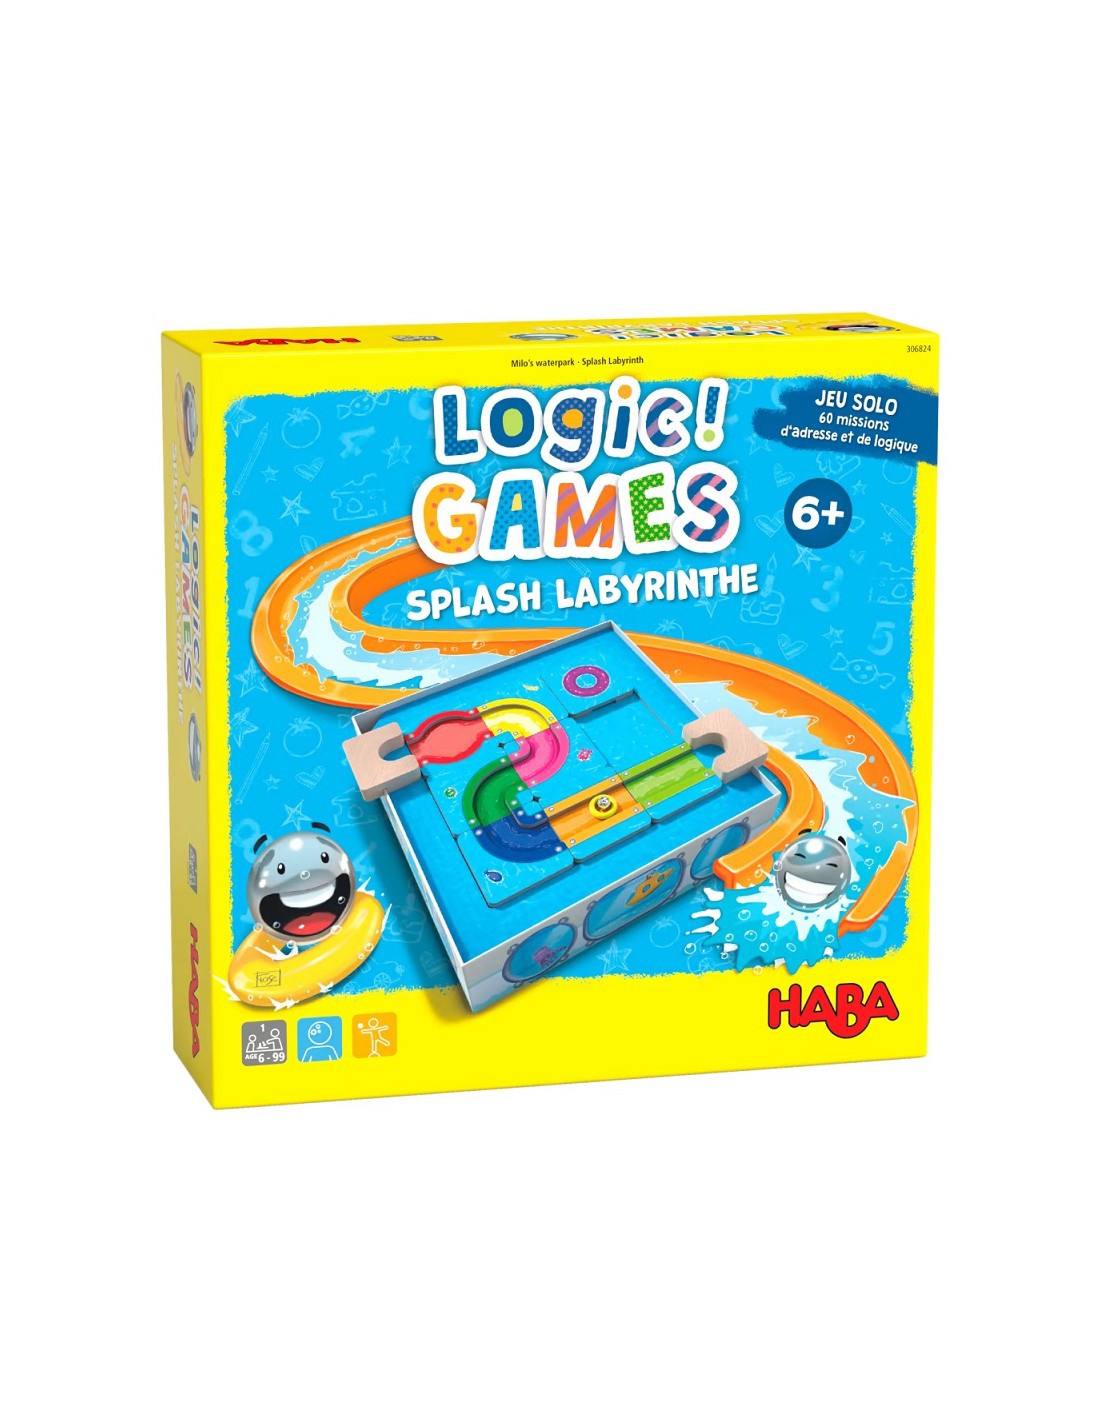 Haba Logic! GAMES - Splash Labyrinth